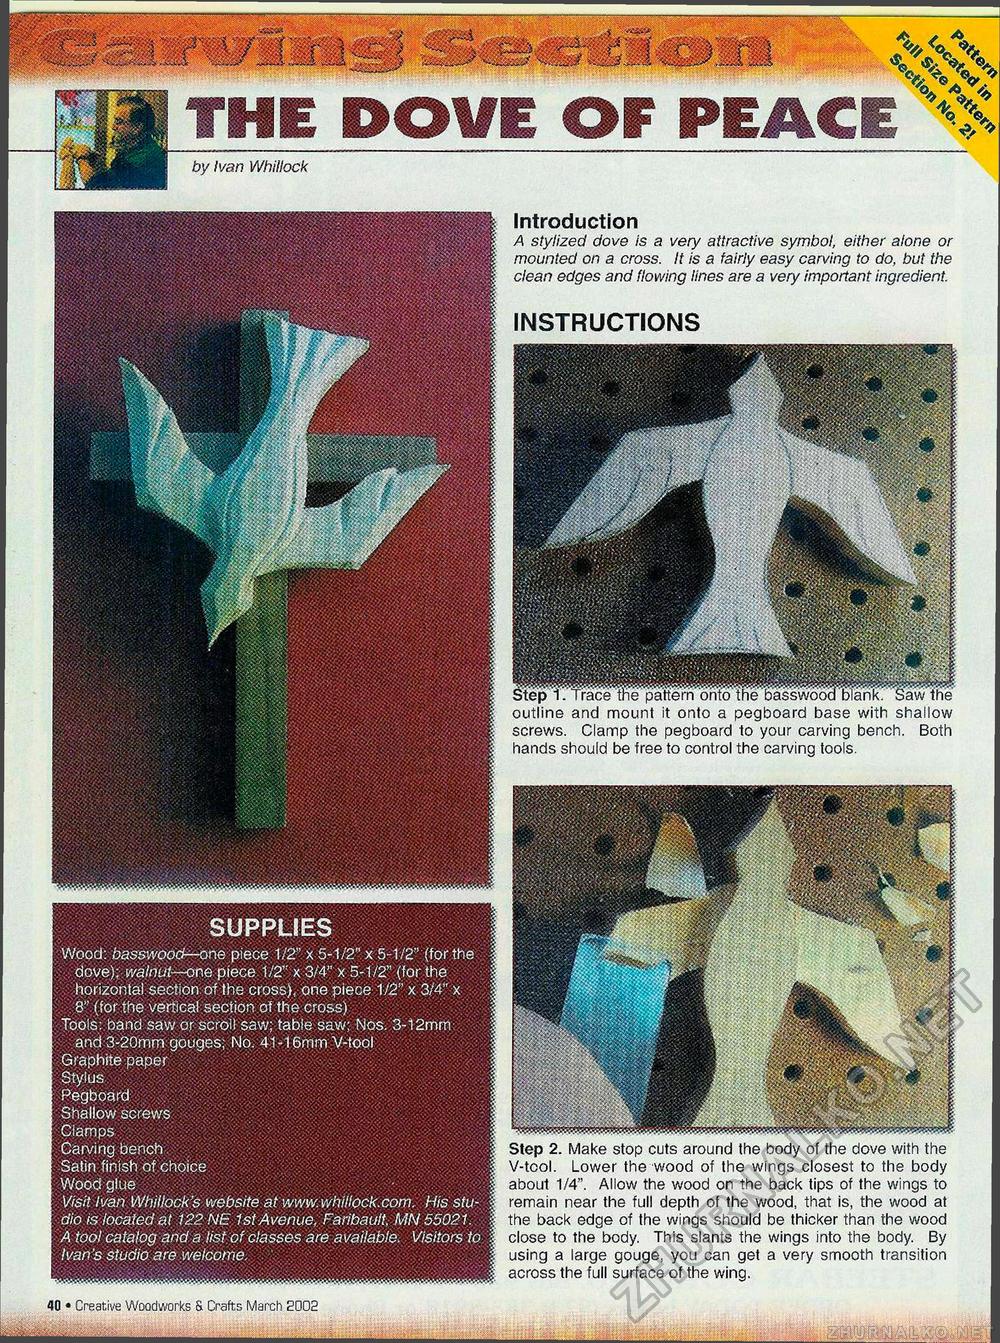 Creative Woodworks & crafts 2002-03,  40